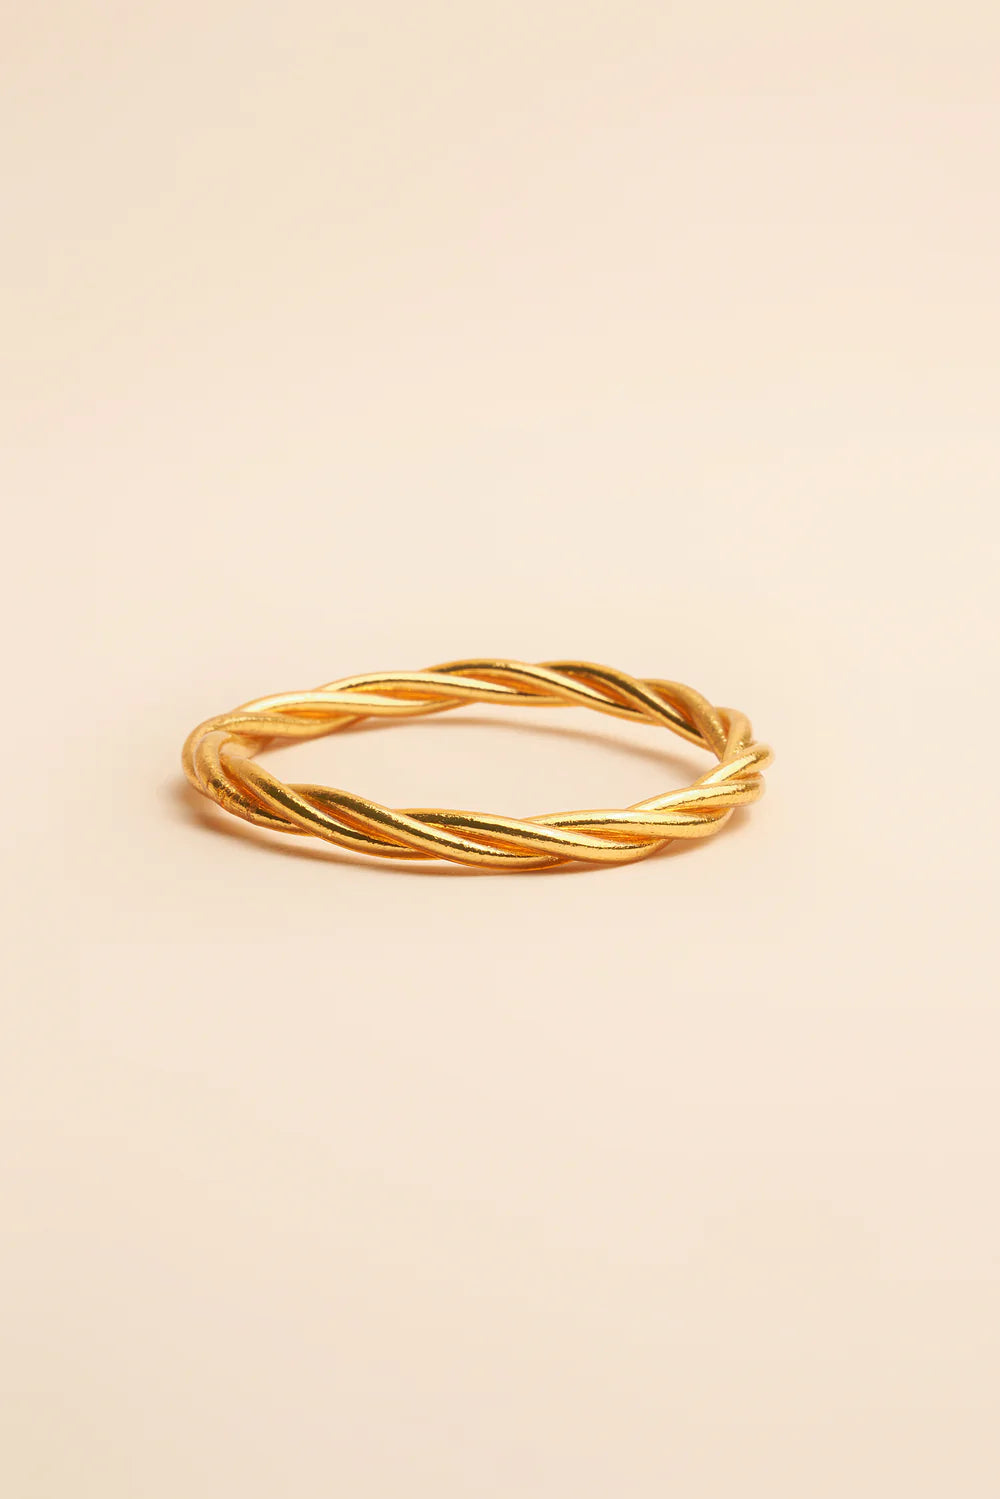 Mantra Goldleaf armband Twisted goud